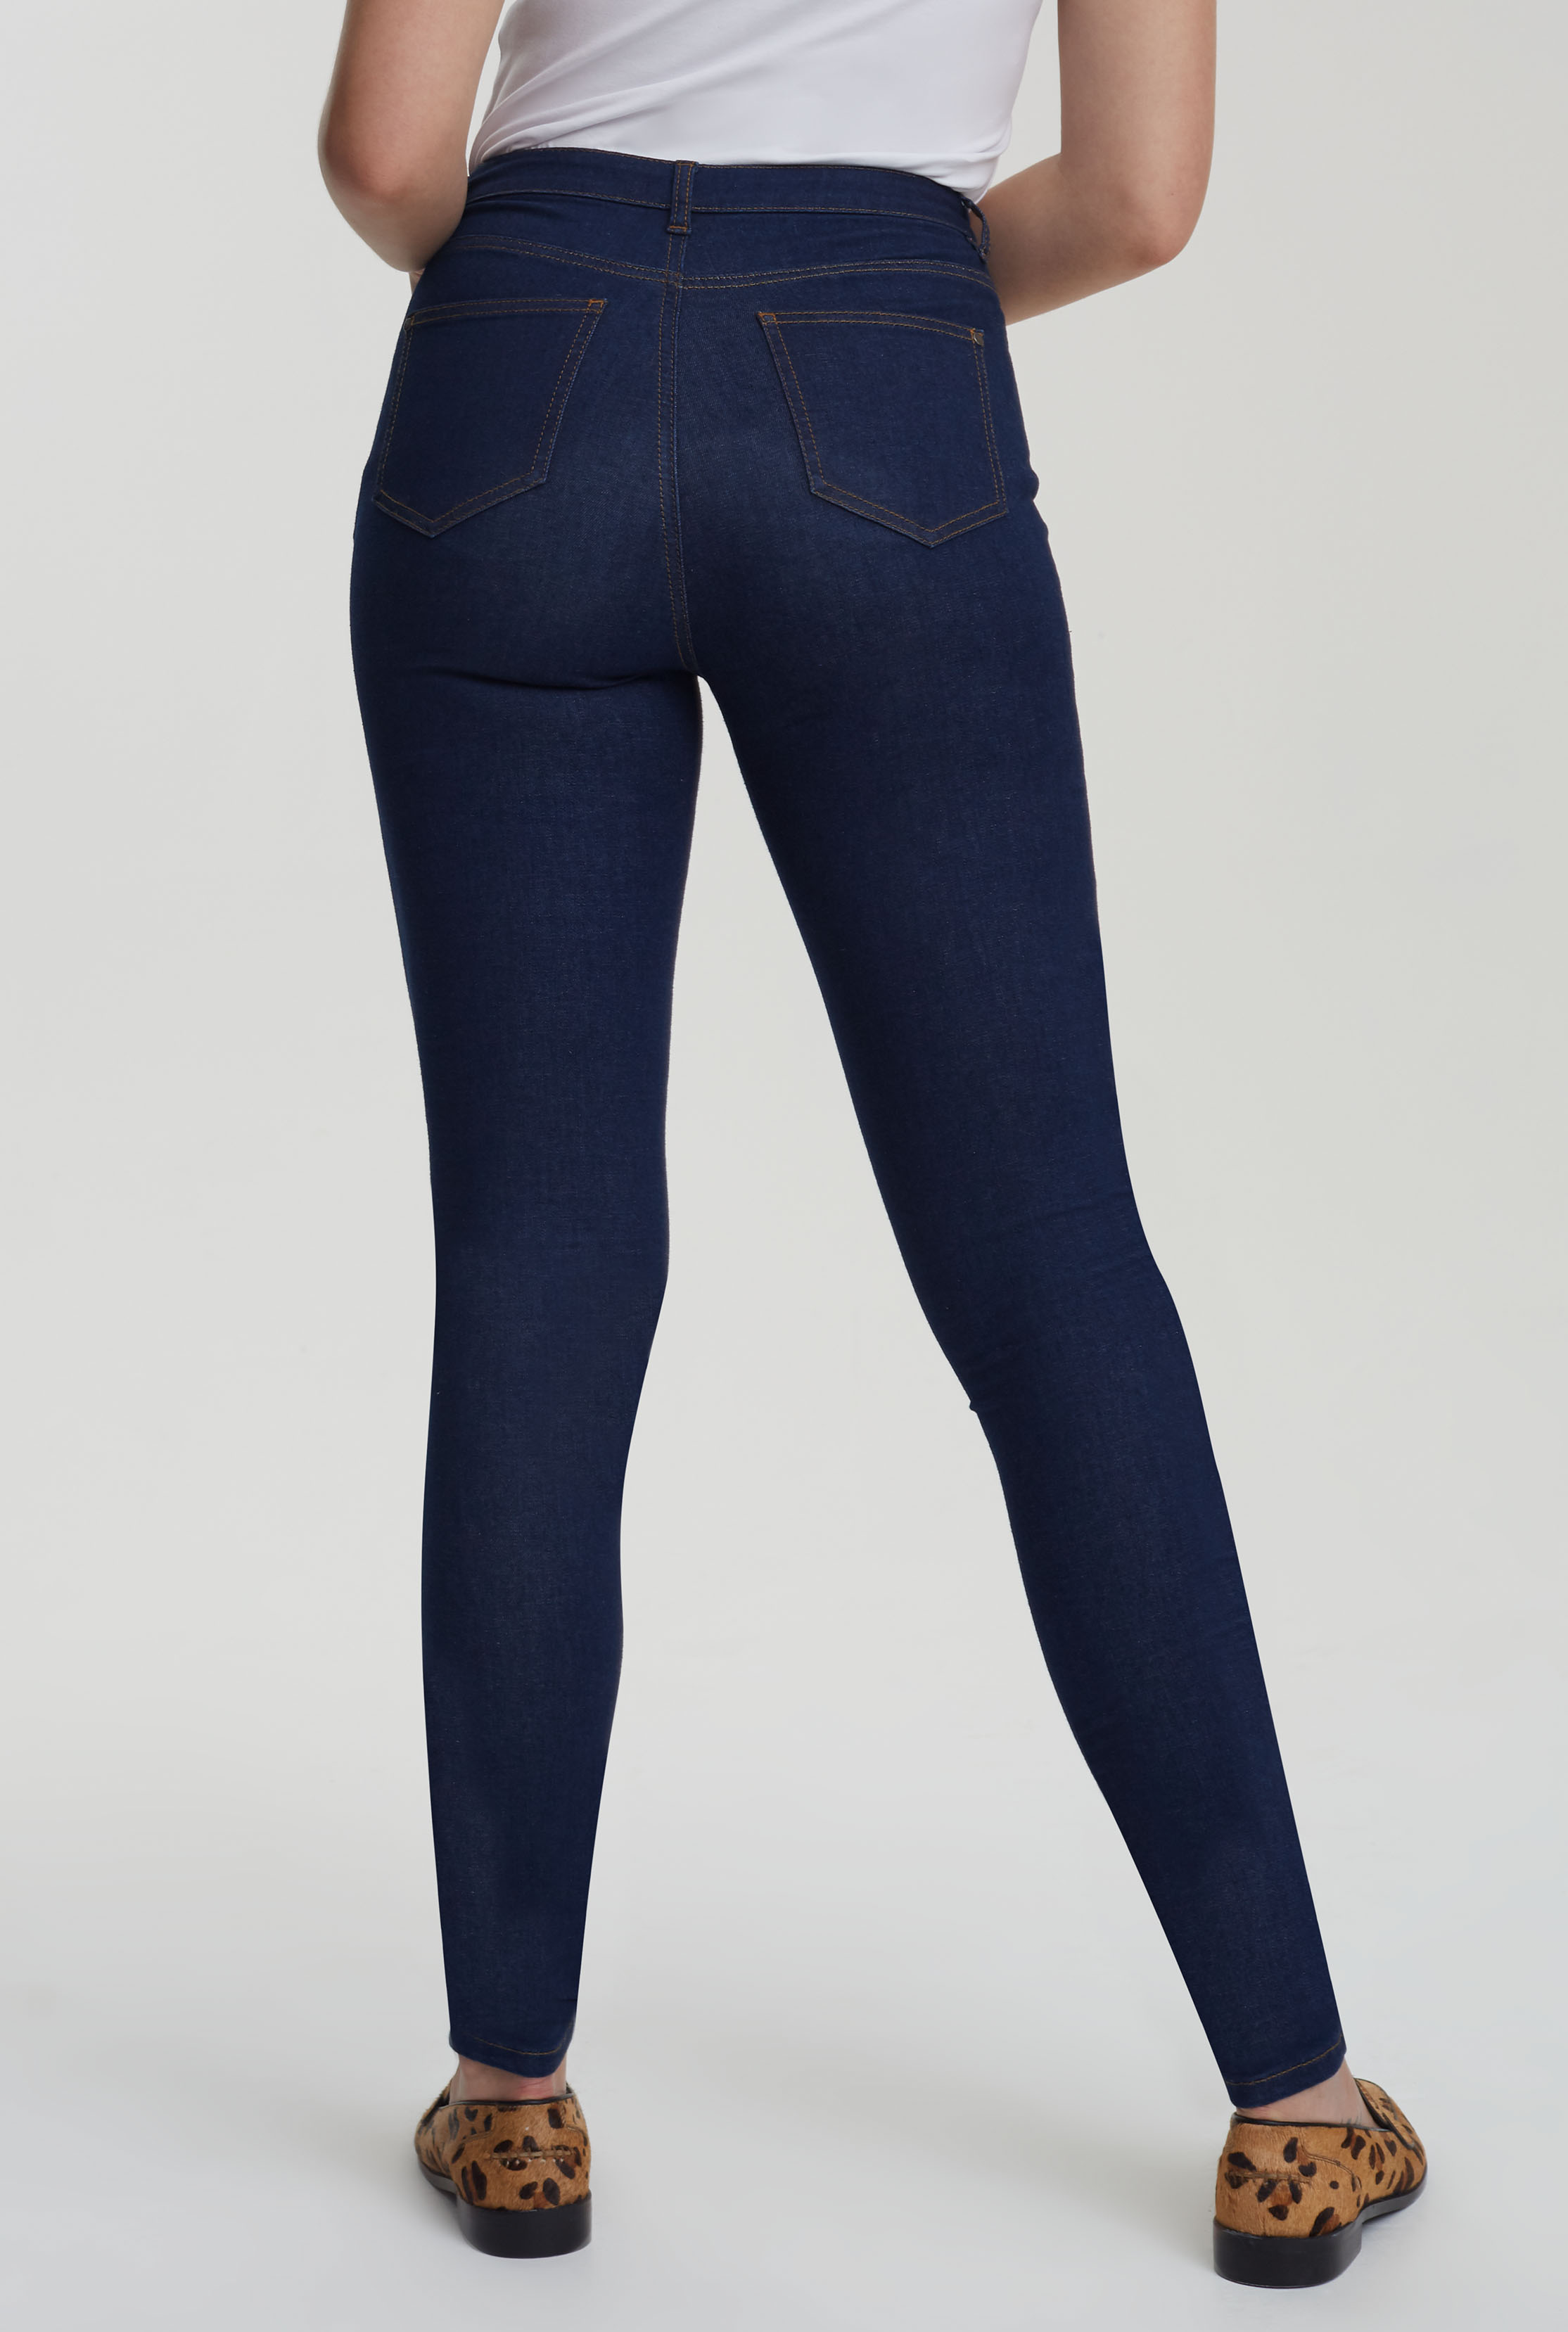 Blue Ultra Stretch Skinny Jeans | Long Tall Sally